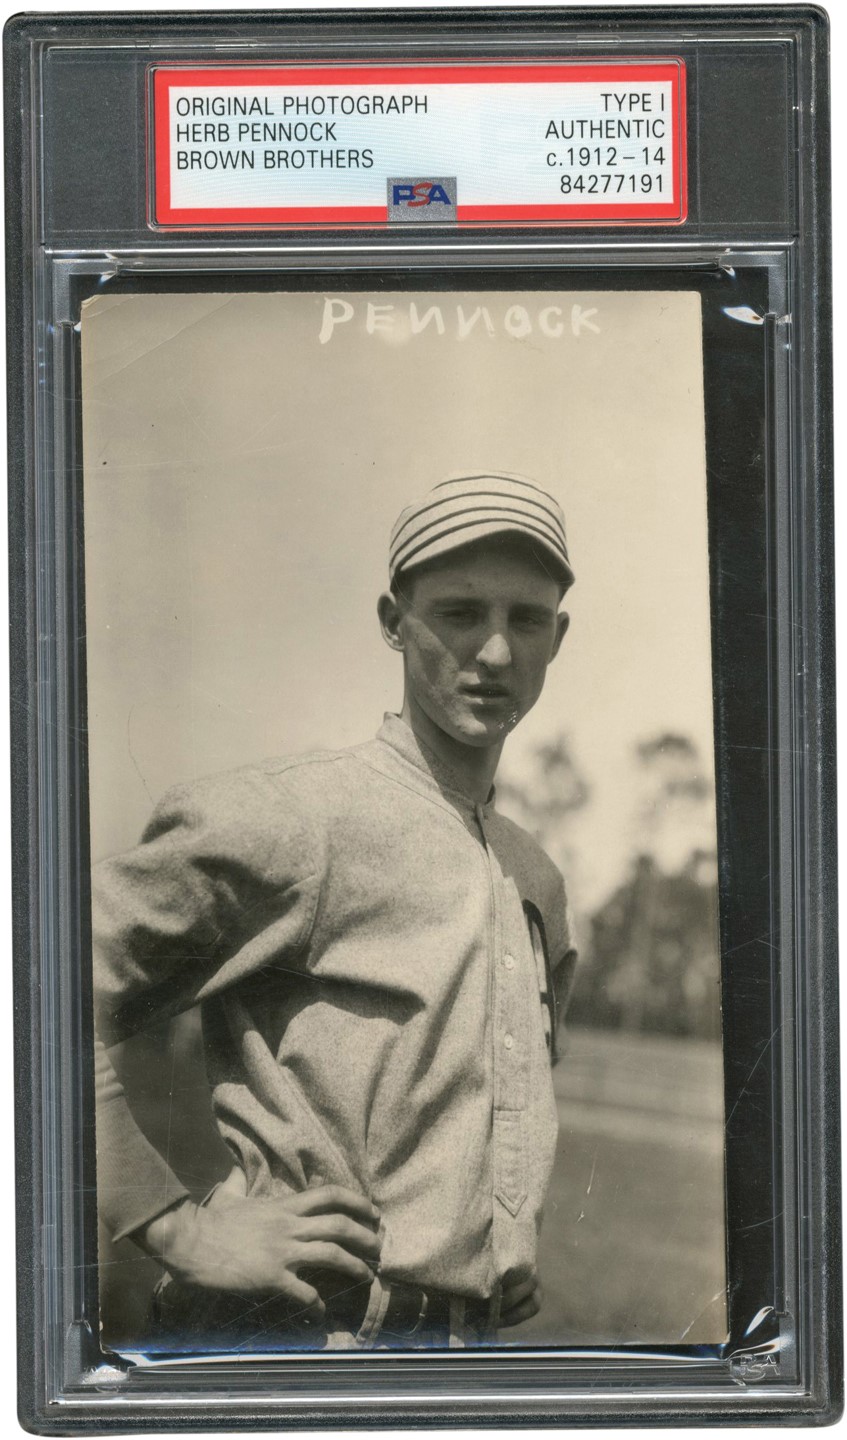 Early Herb Pennock Philadelphia Athletics Photograph (PSA Type I)